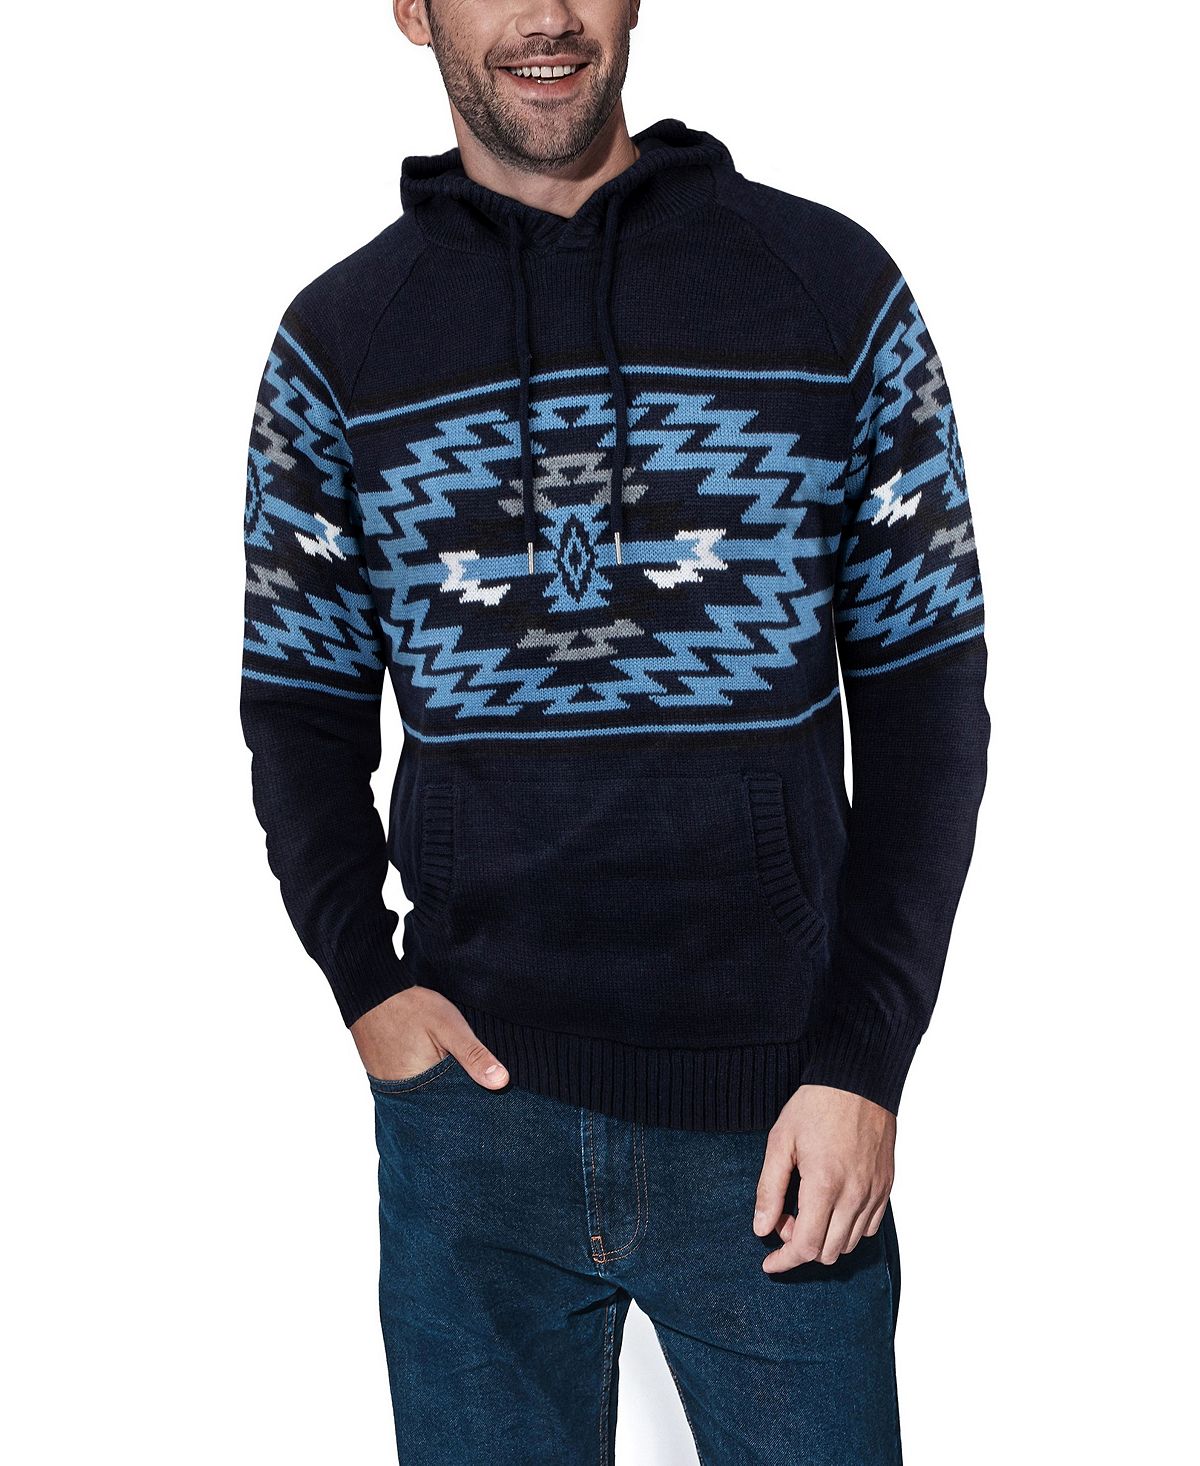 Мужской свитер с капюшоном aztec X-Ray, темно-синий